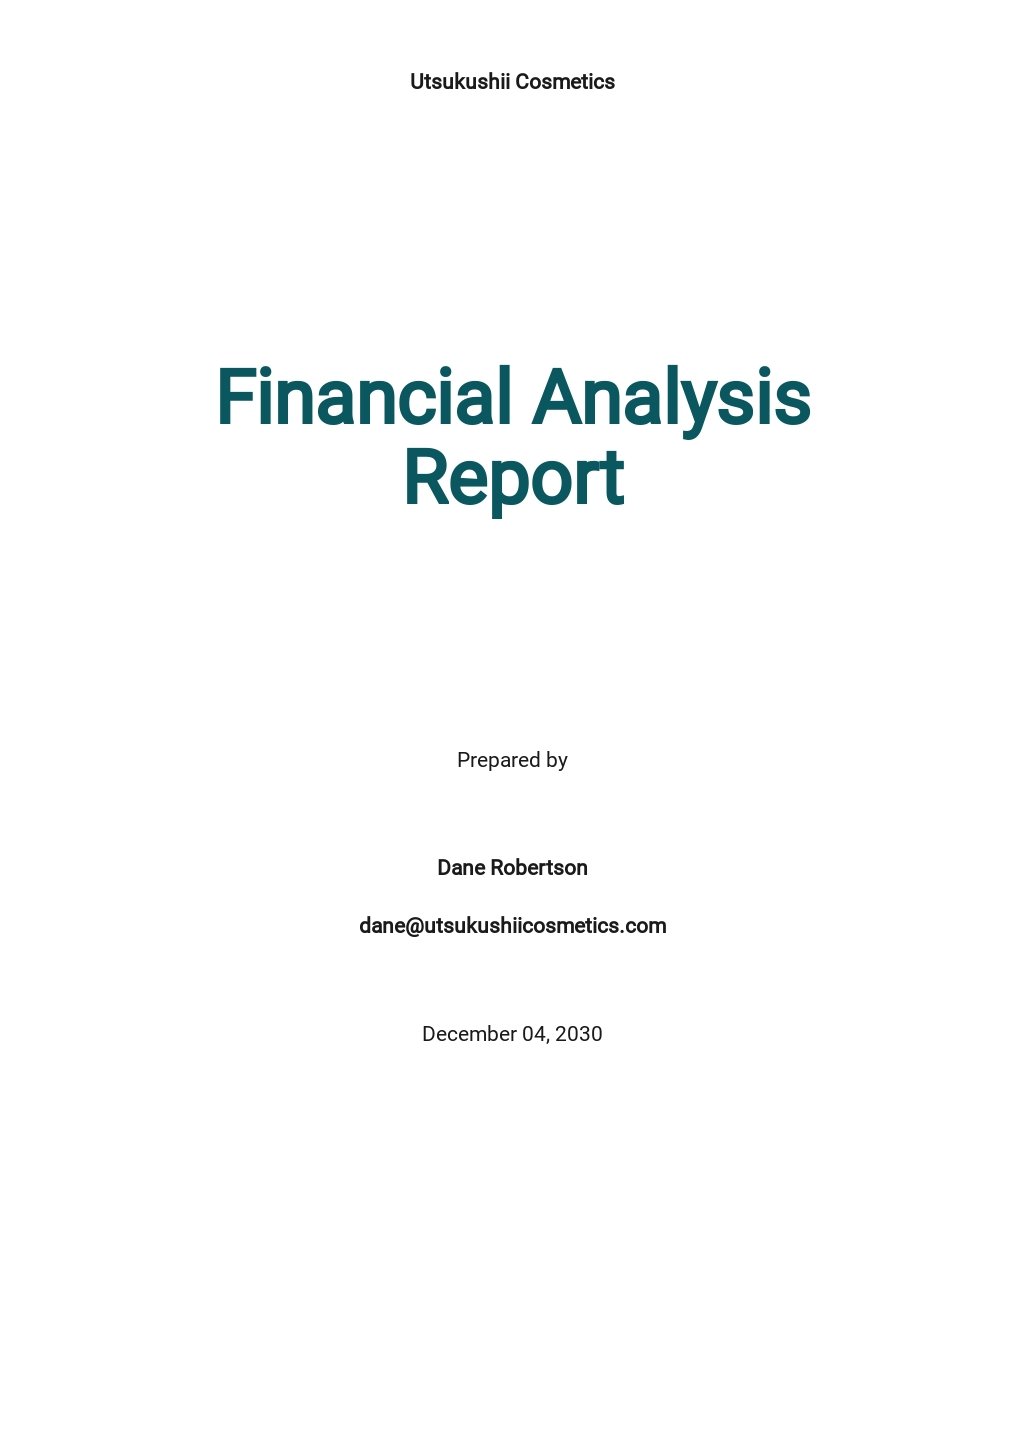 Financial Analysis Report Template.jpe